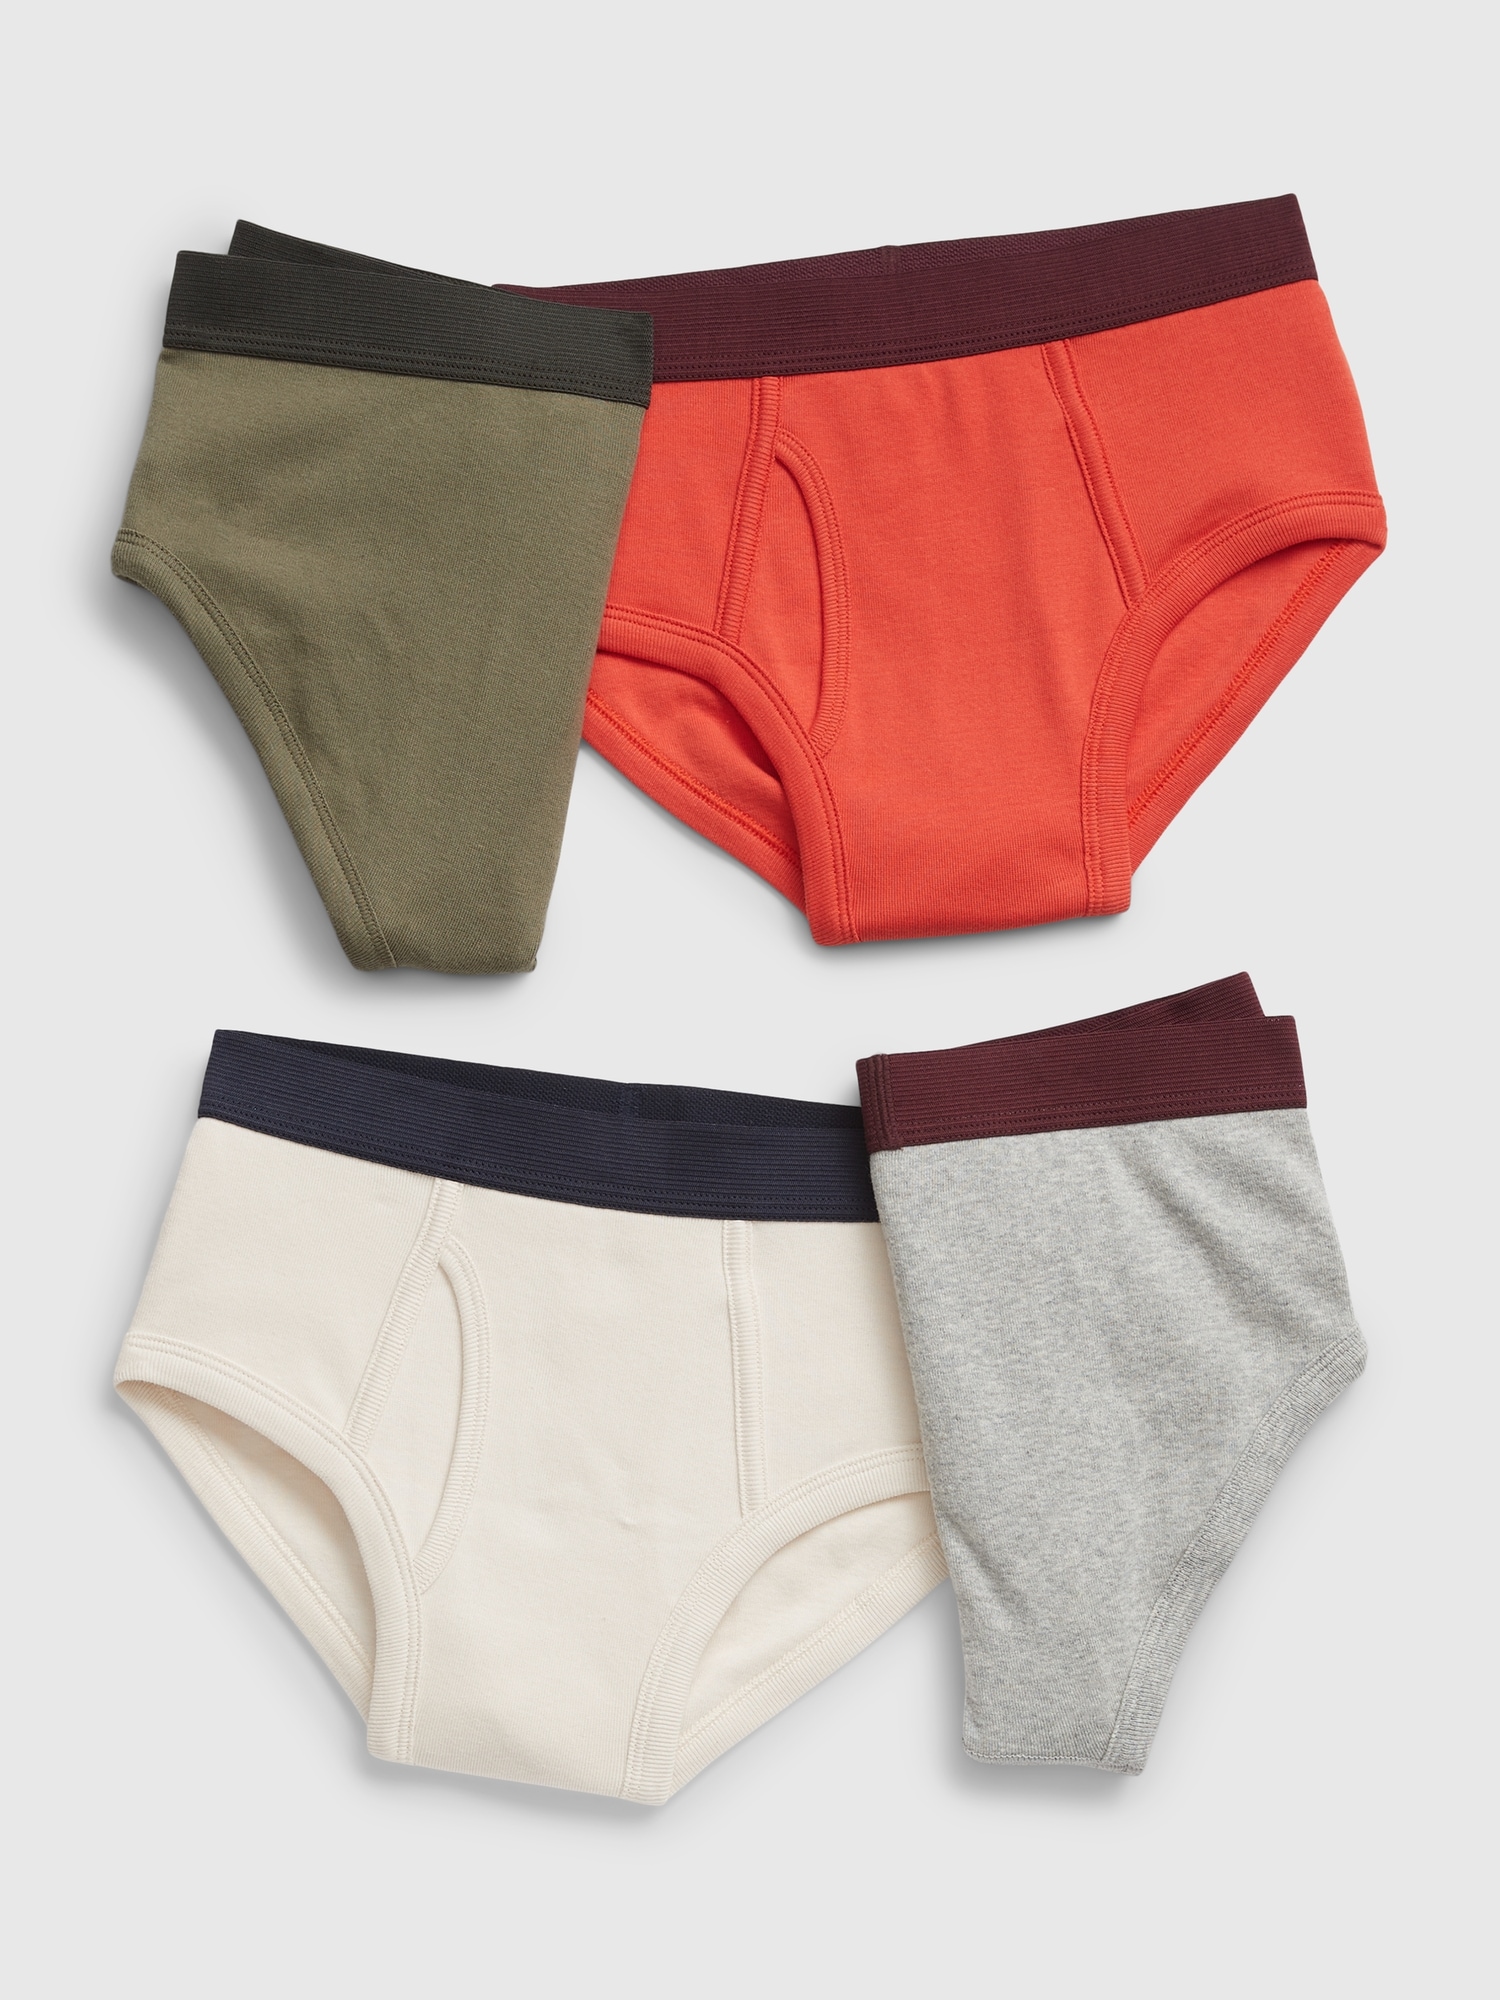 4-Pack Boutique Girls' Antibacterial Briefs Kids Series Panties Cotton  Underwear